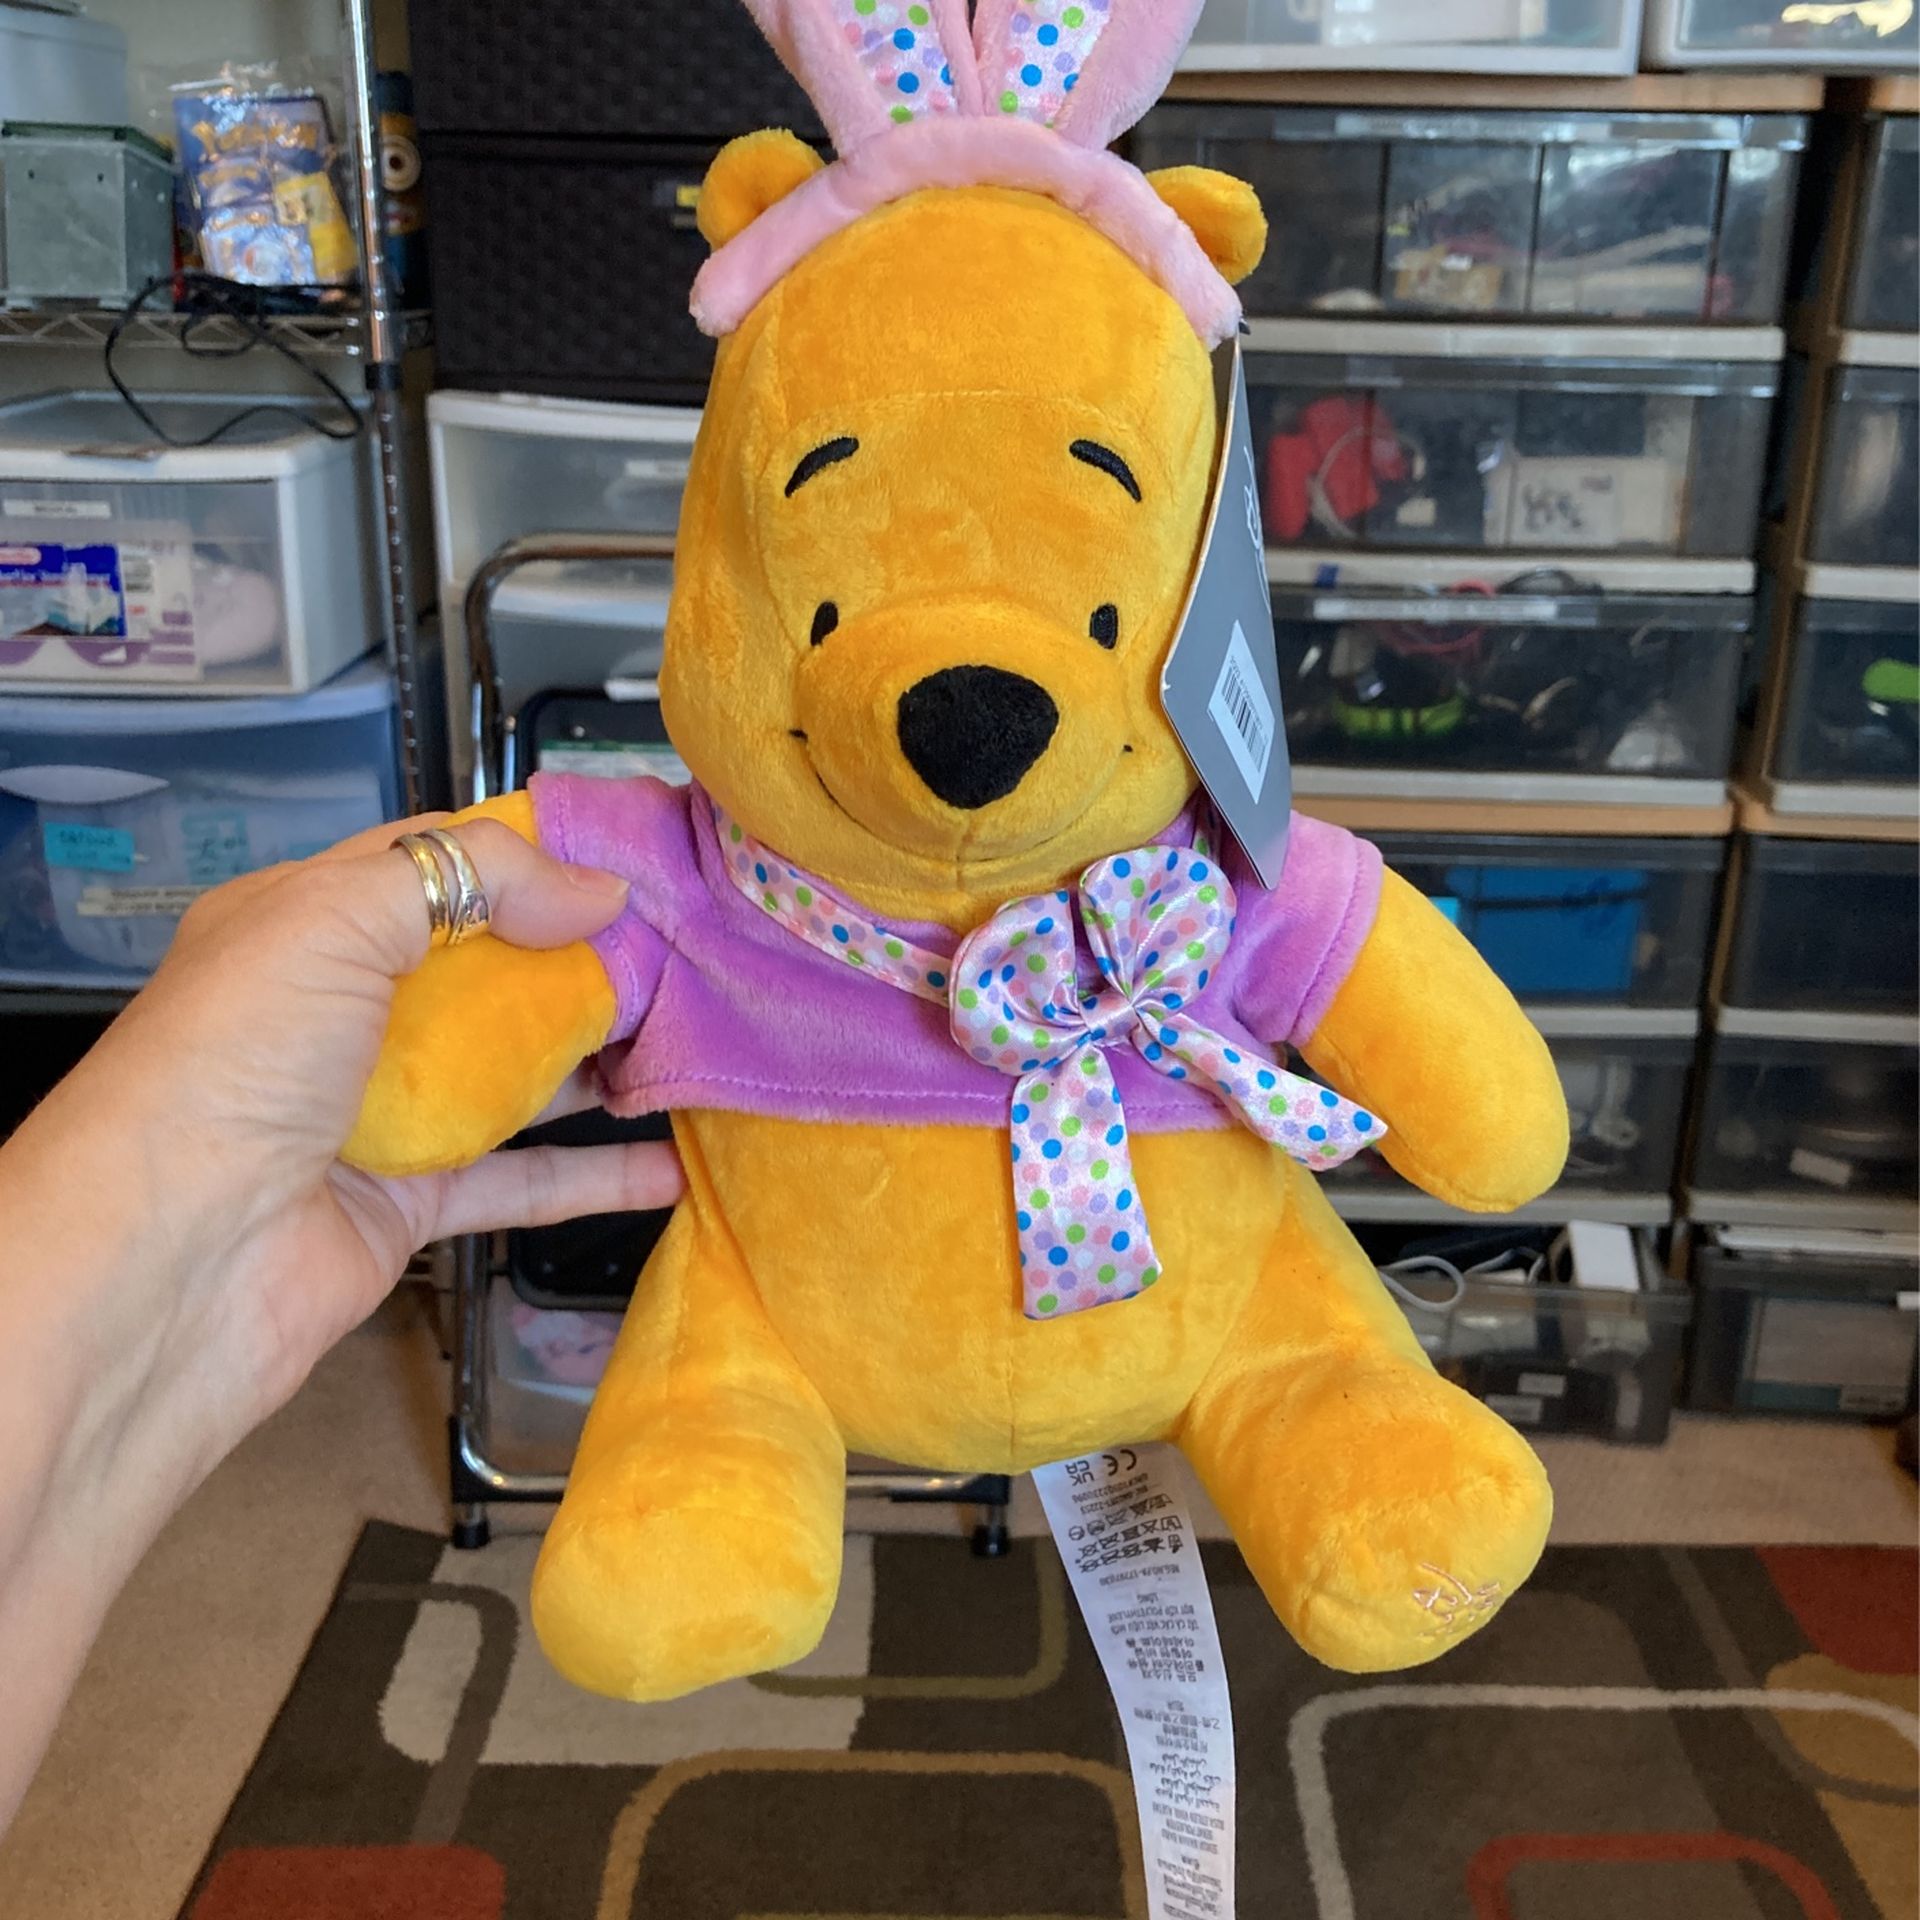 Disney Winnie the Pooh dressed like an Easter bunny